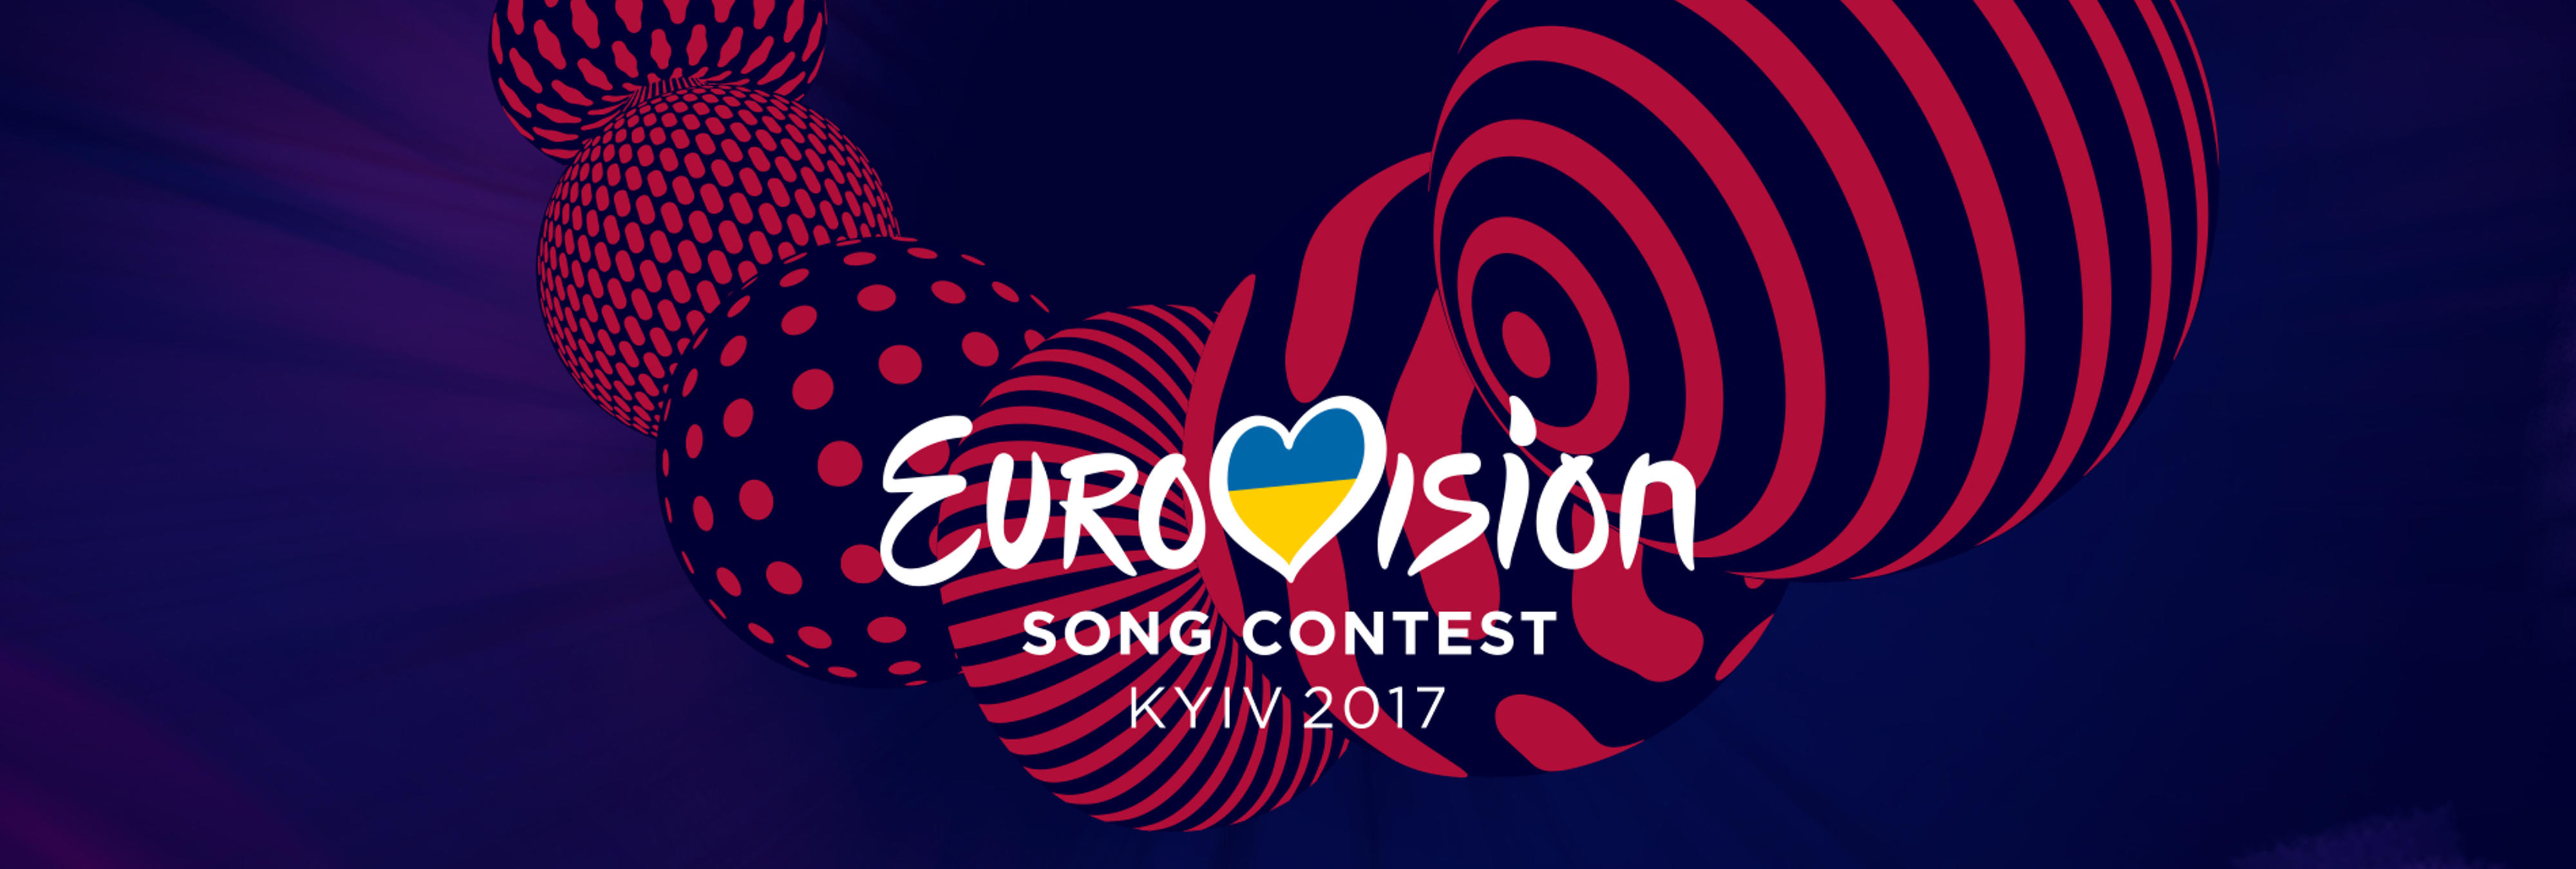 Eurovision bookmakers. Евровидение логотип. Евровидение 2017 логотип. Символ Евровидения. Евровидение заставка.